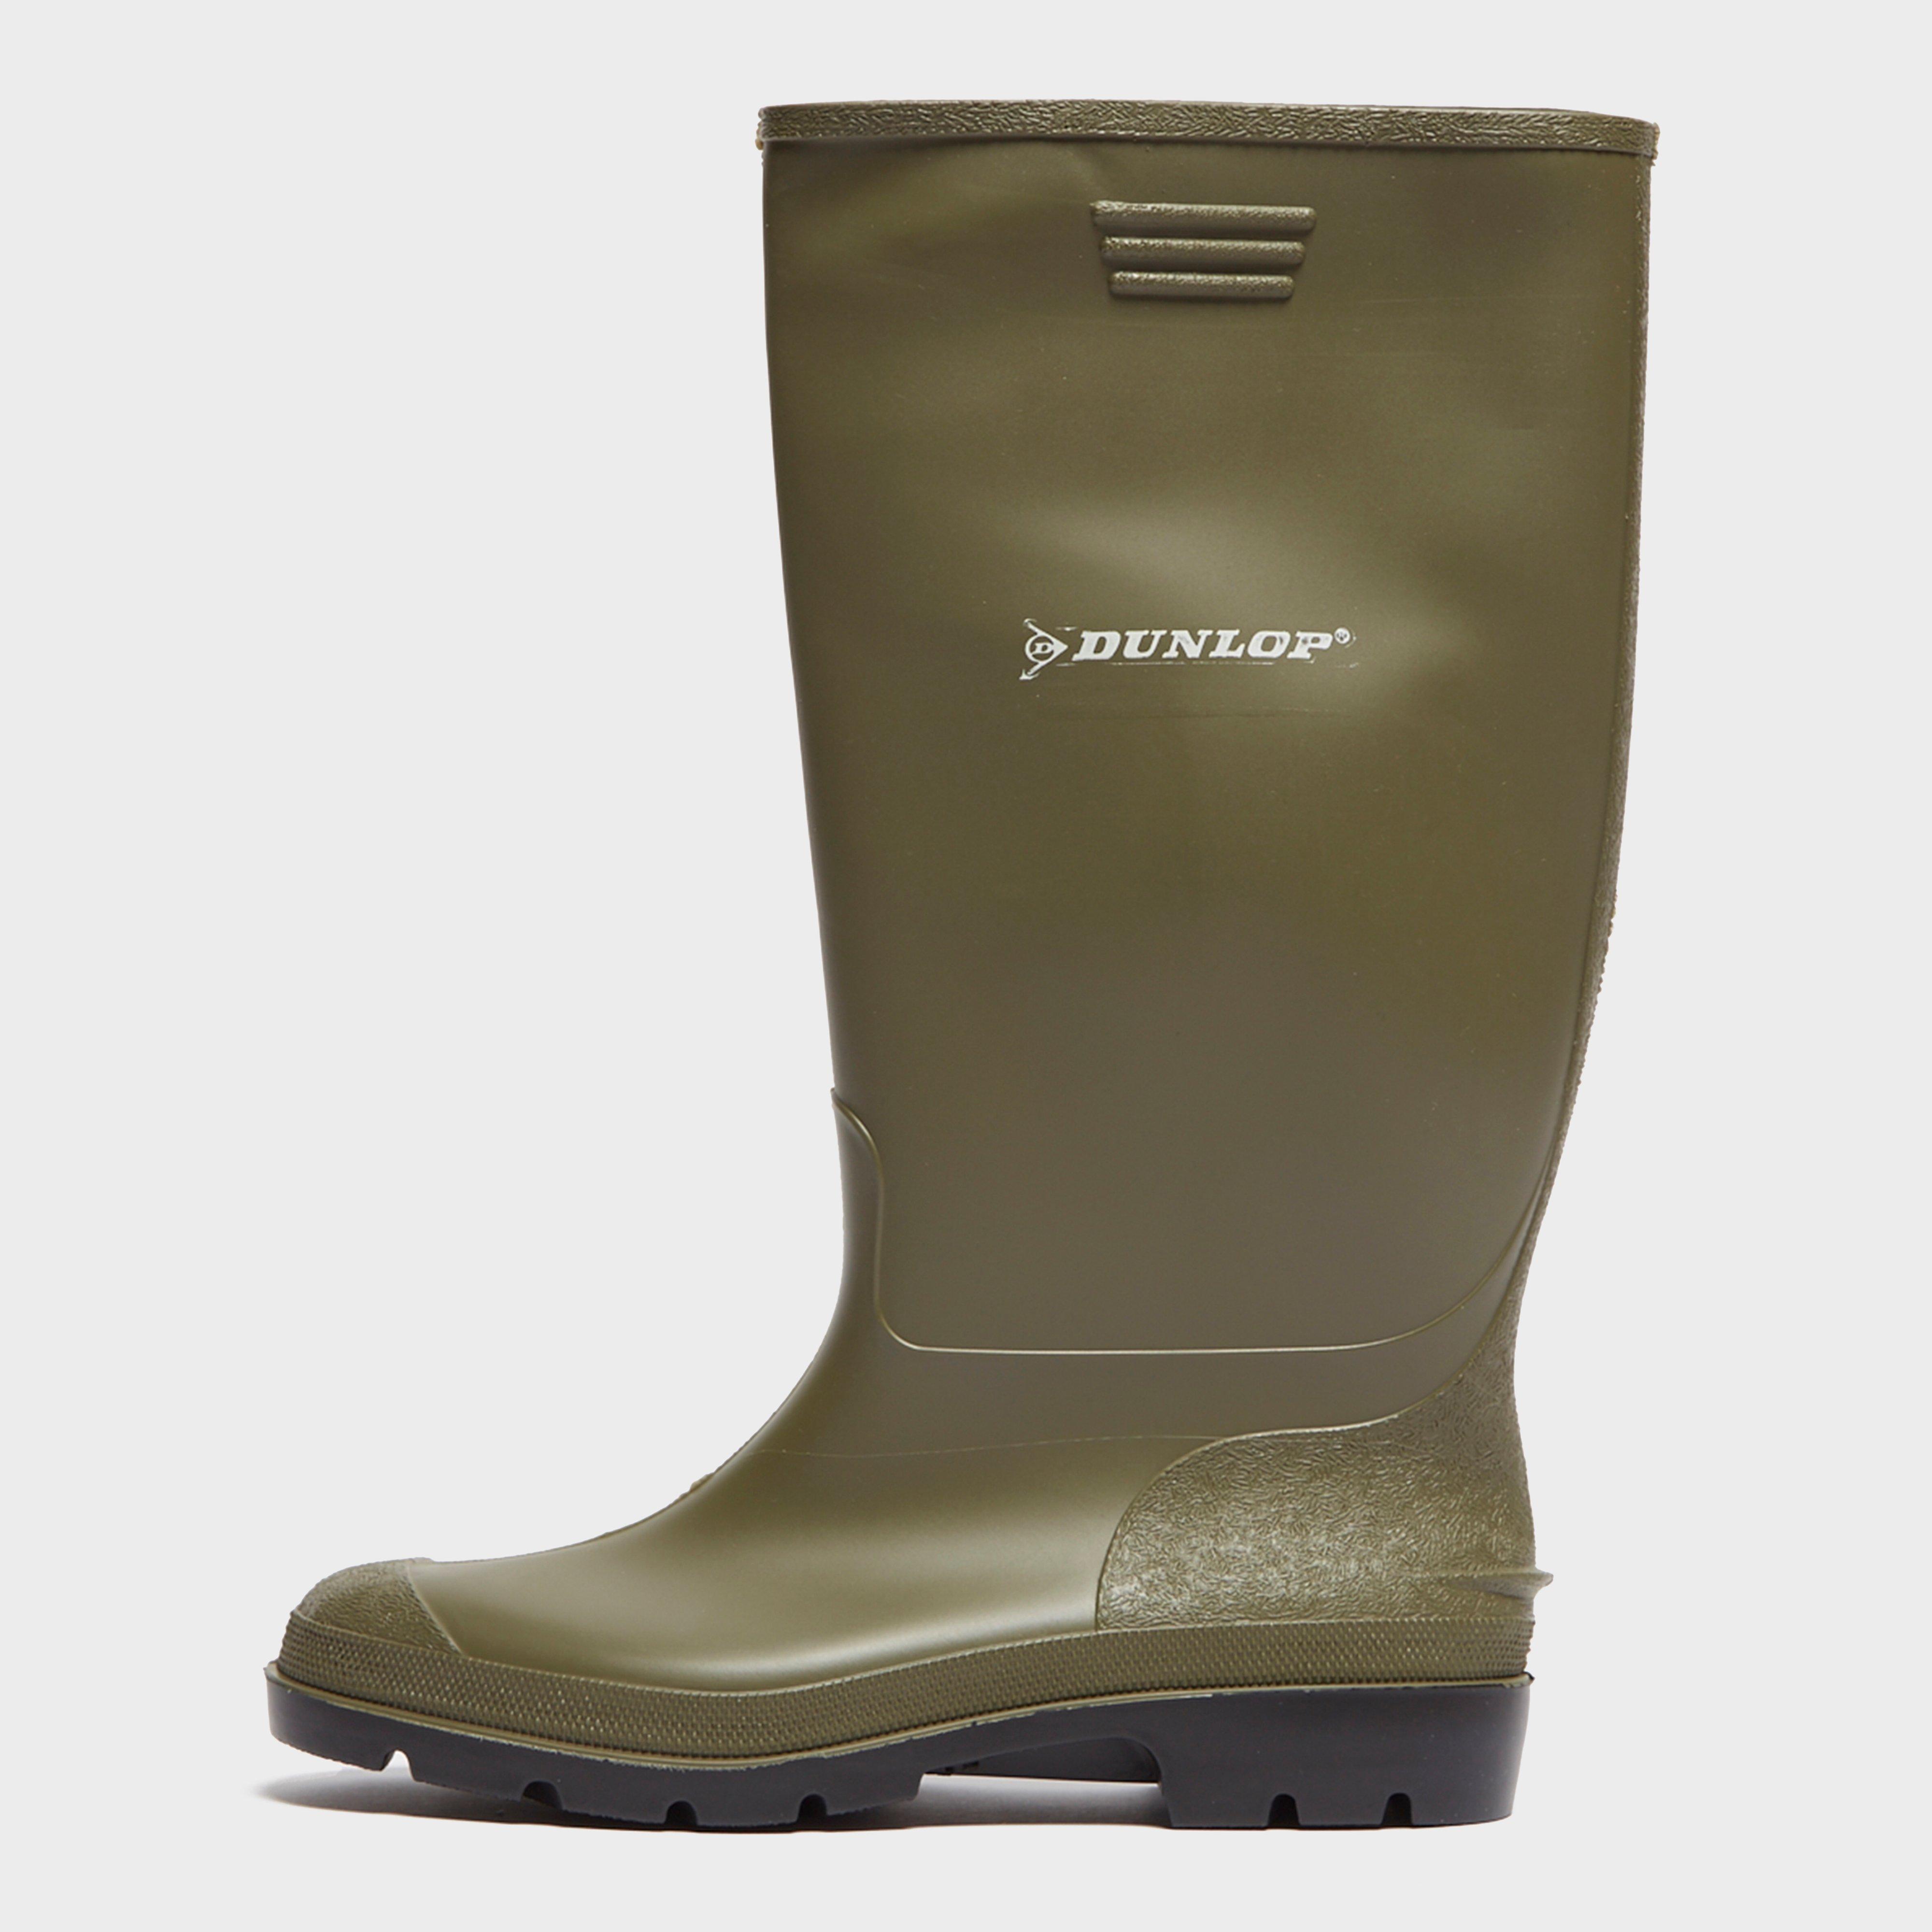 Dunlop Pricemaster Wellington Boots, Green